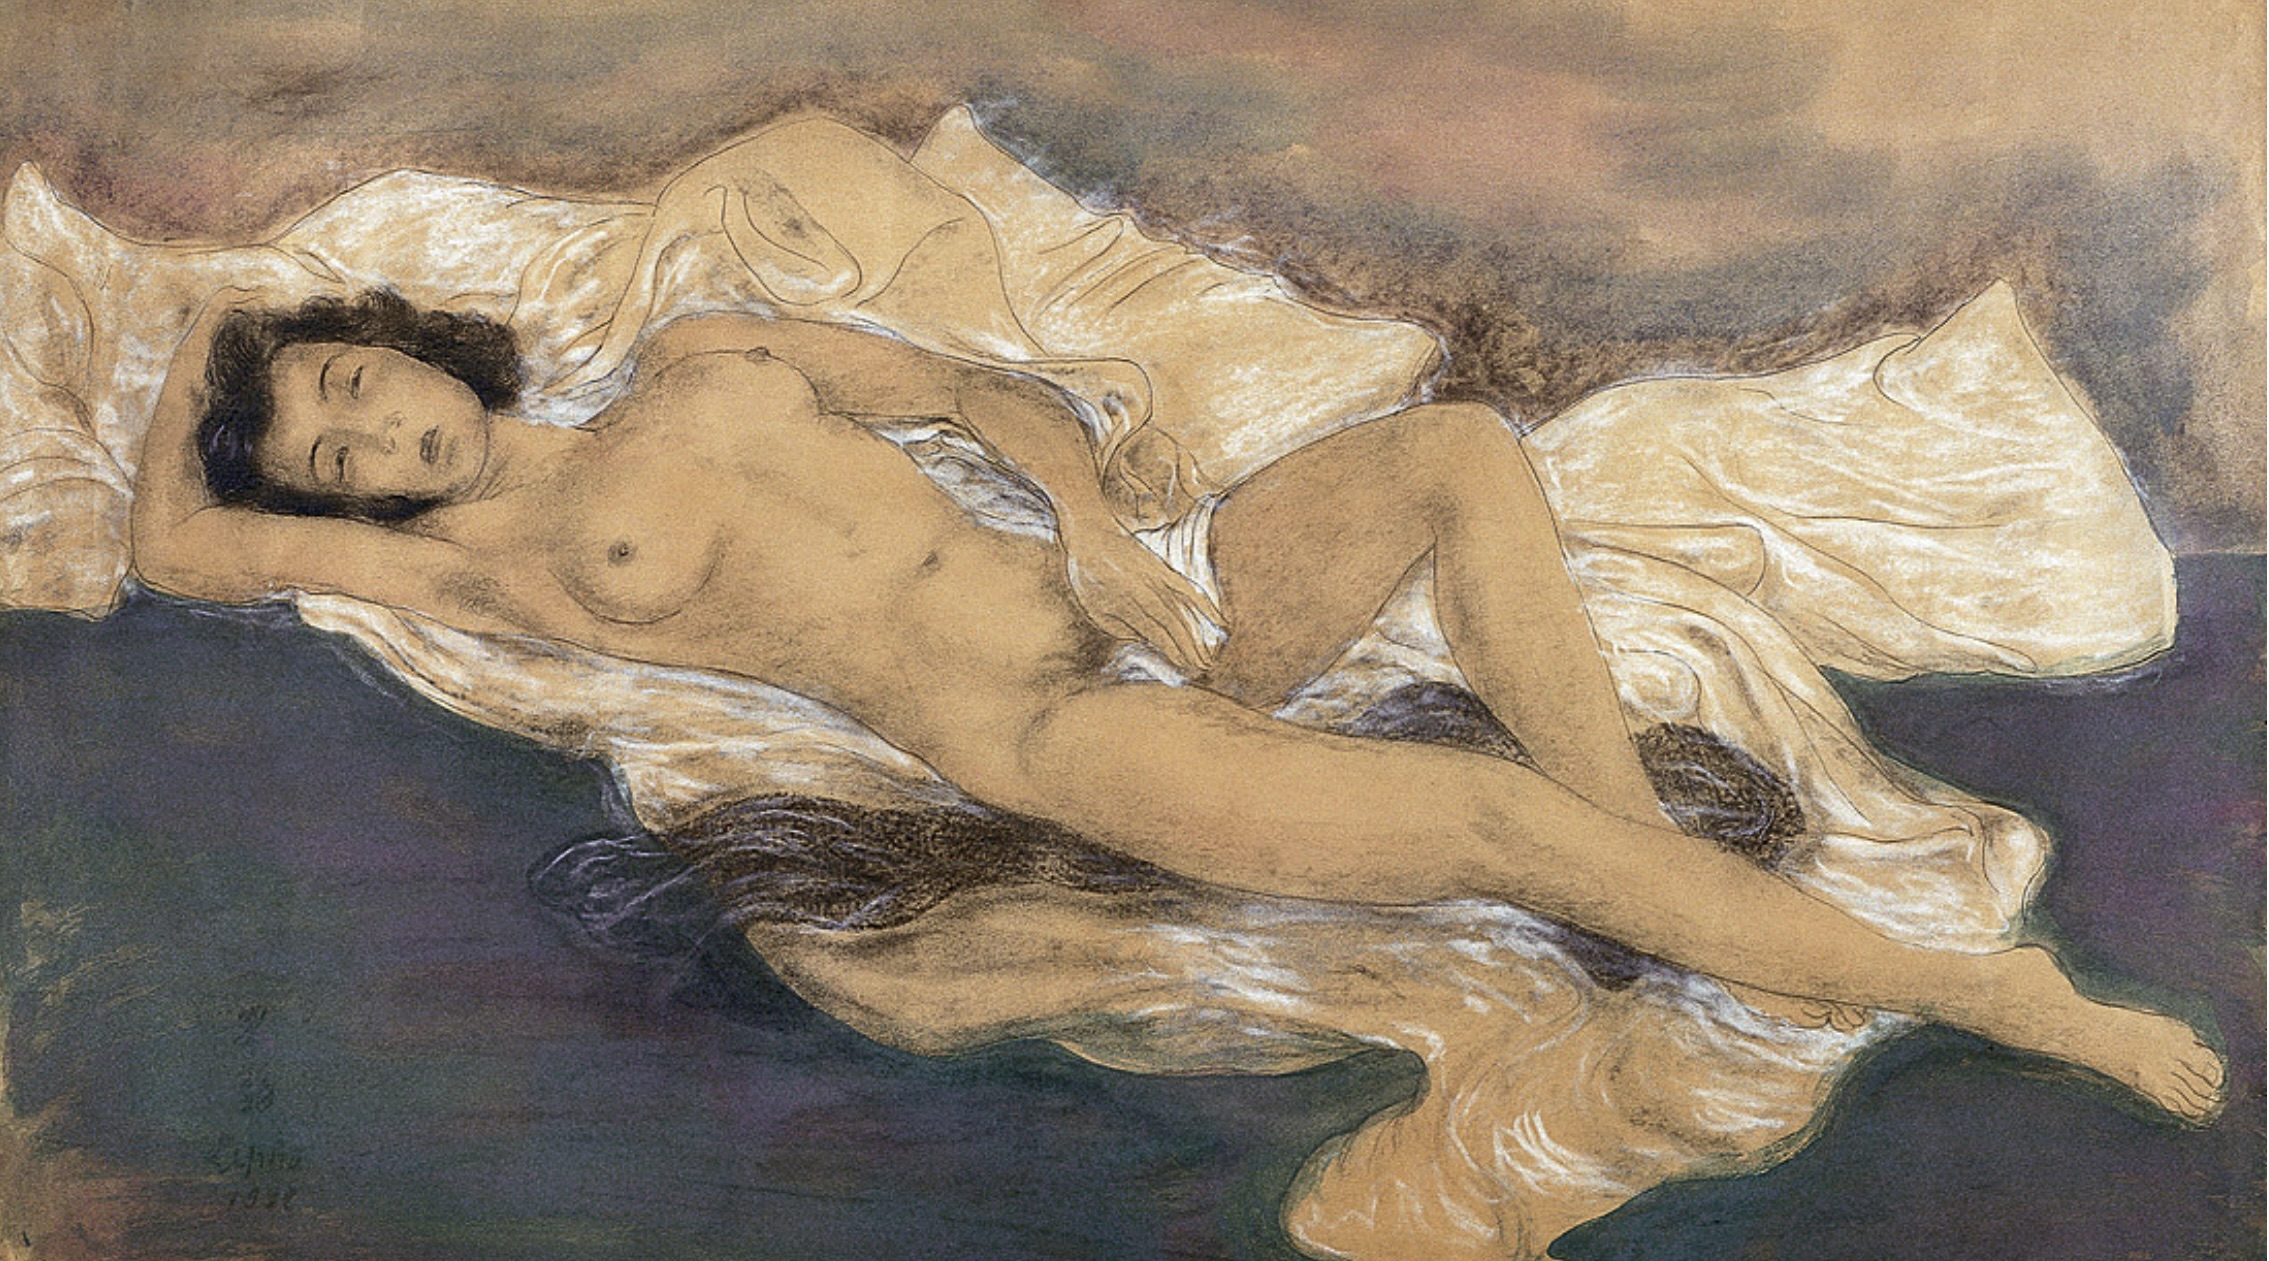 Lê Phô, Nude Woman, 1932, chalk on paper, 60 x 99cm